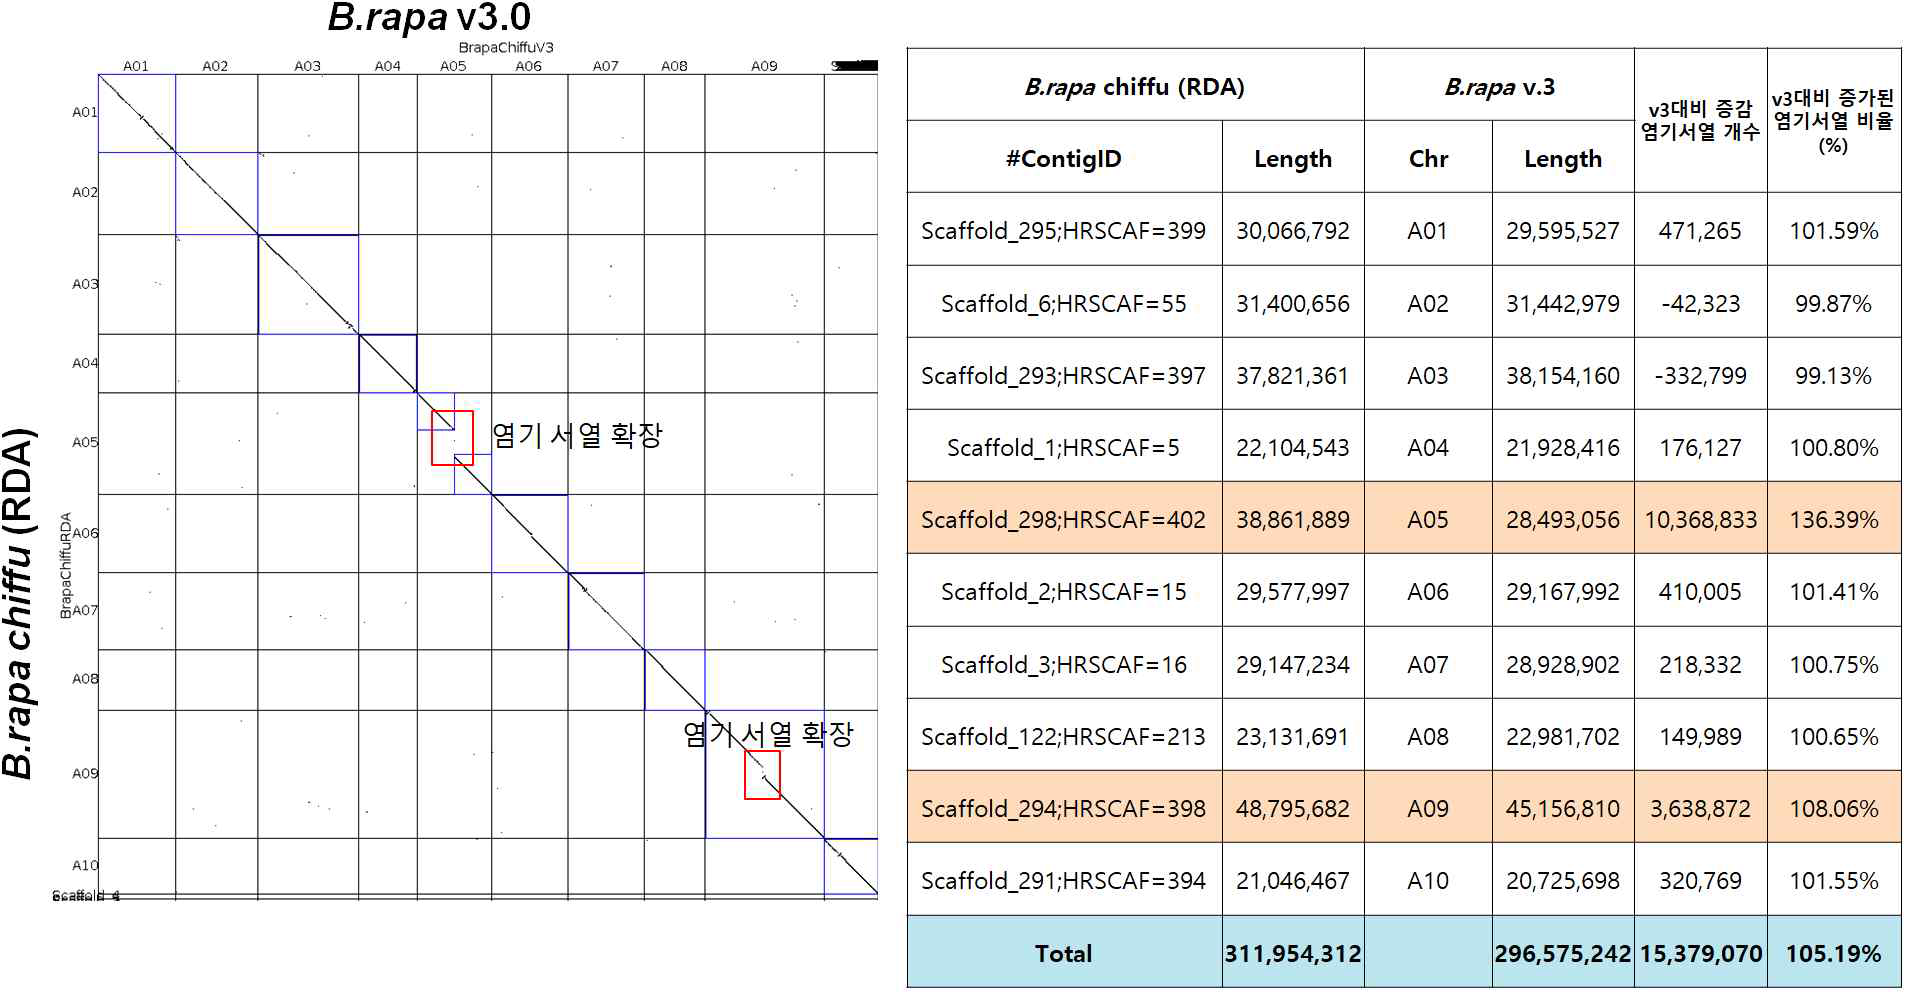 B. rapa Chiifu (RDA) vs B. rapa v3.0 유전체 구조 비교 분석